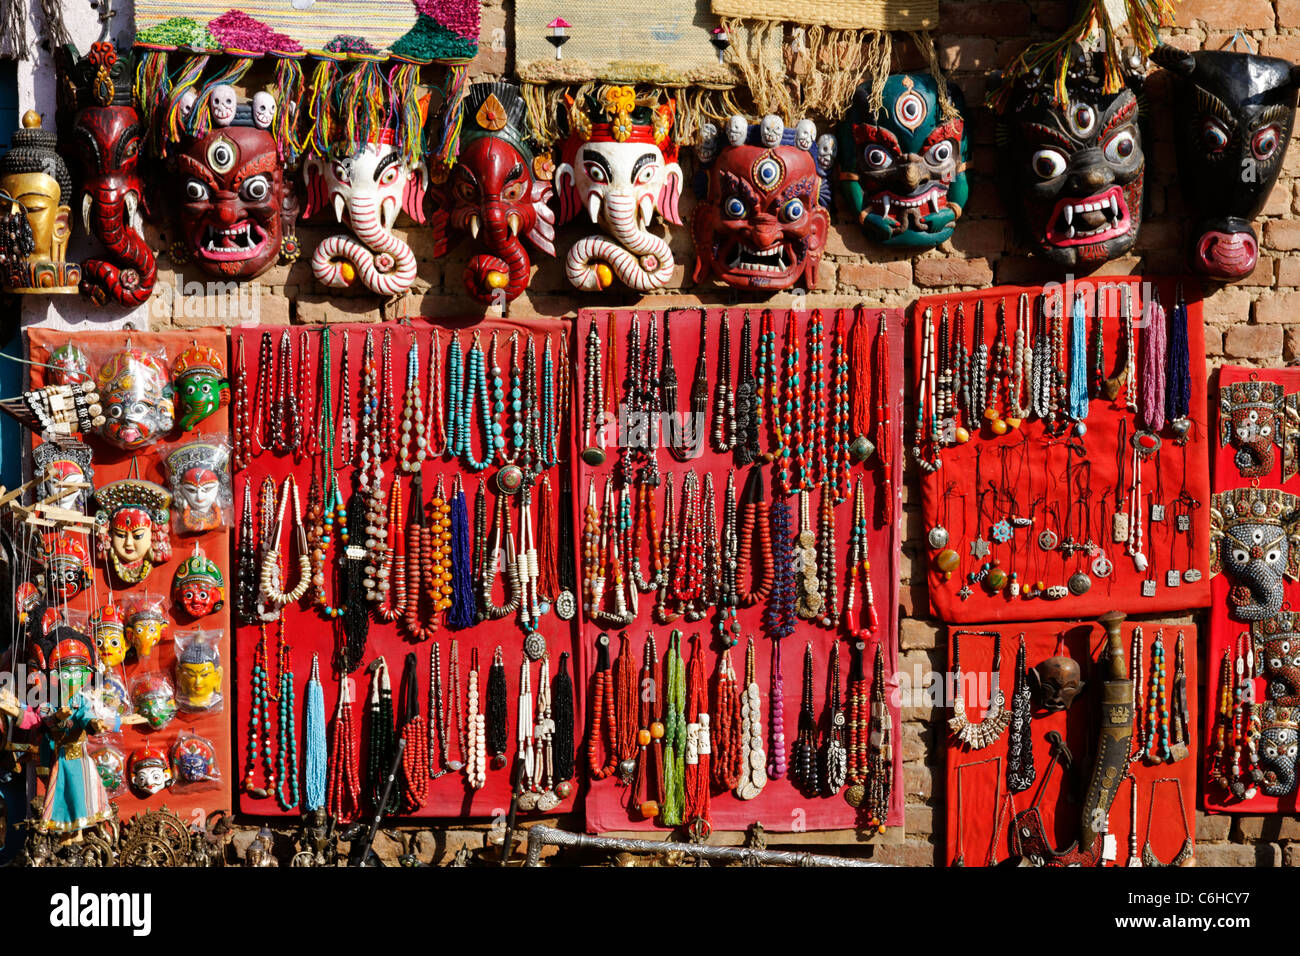 Souvenirs on display in a shop, Kathmandu, Nepal Stock Photo